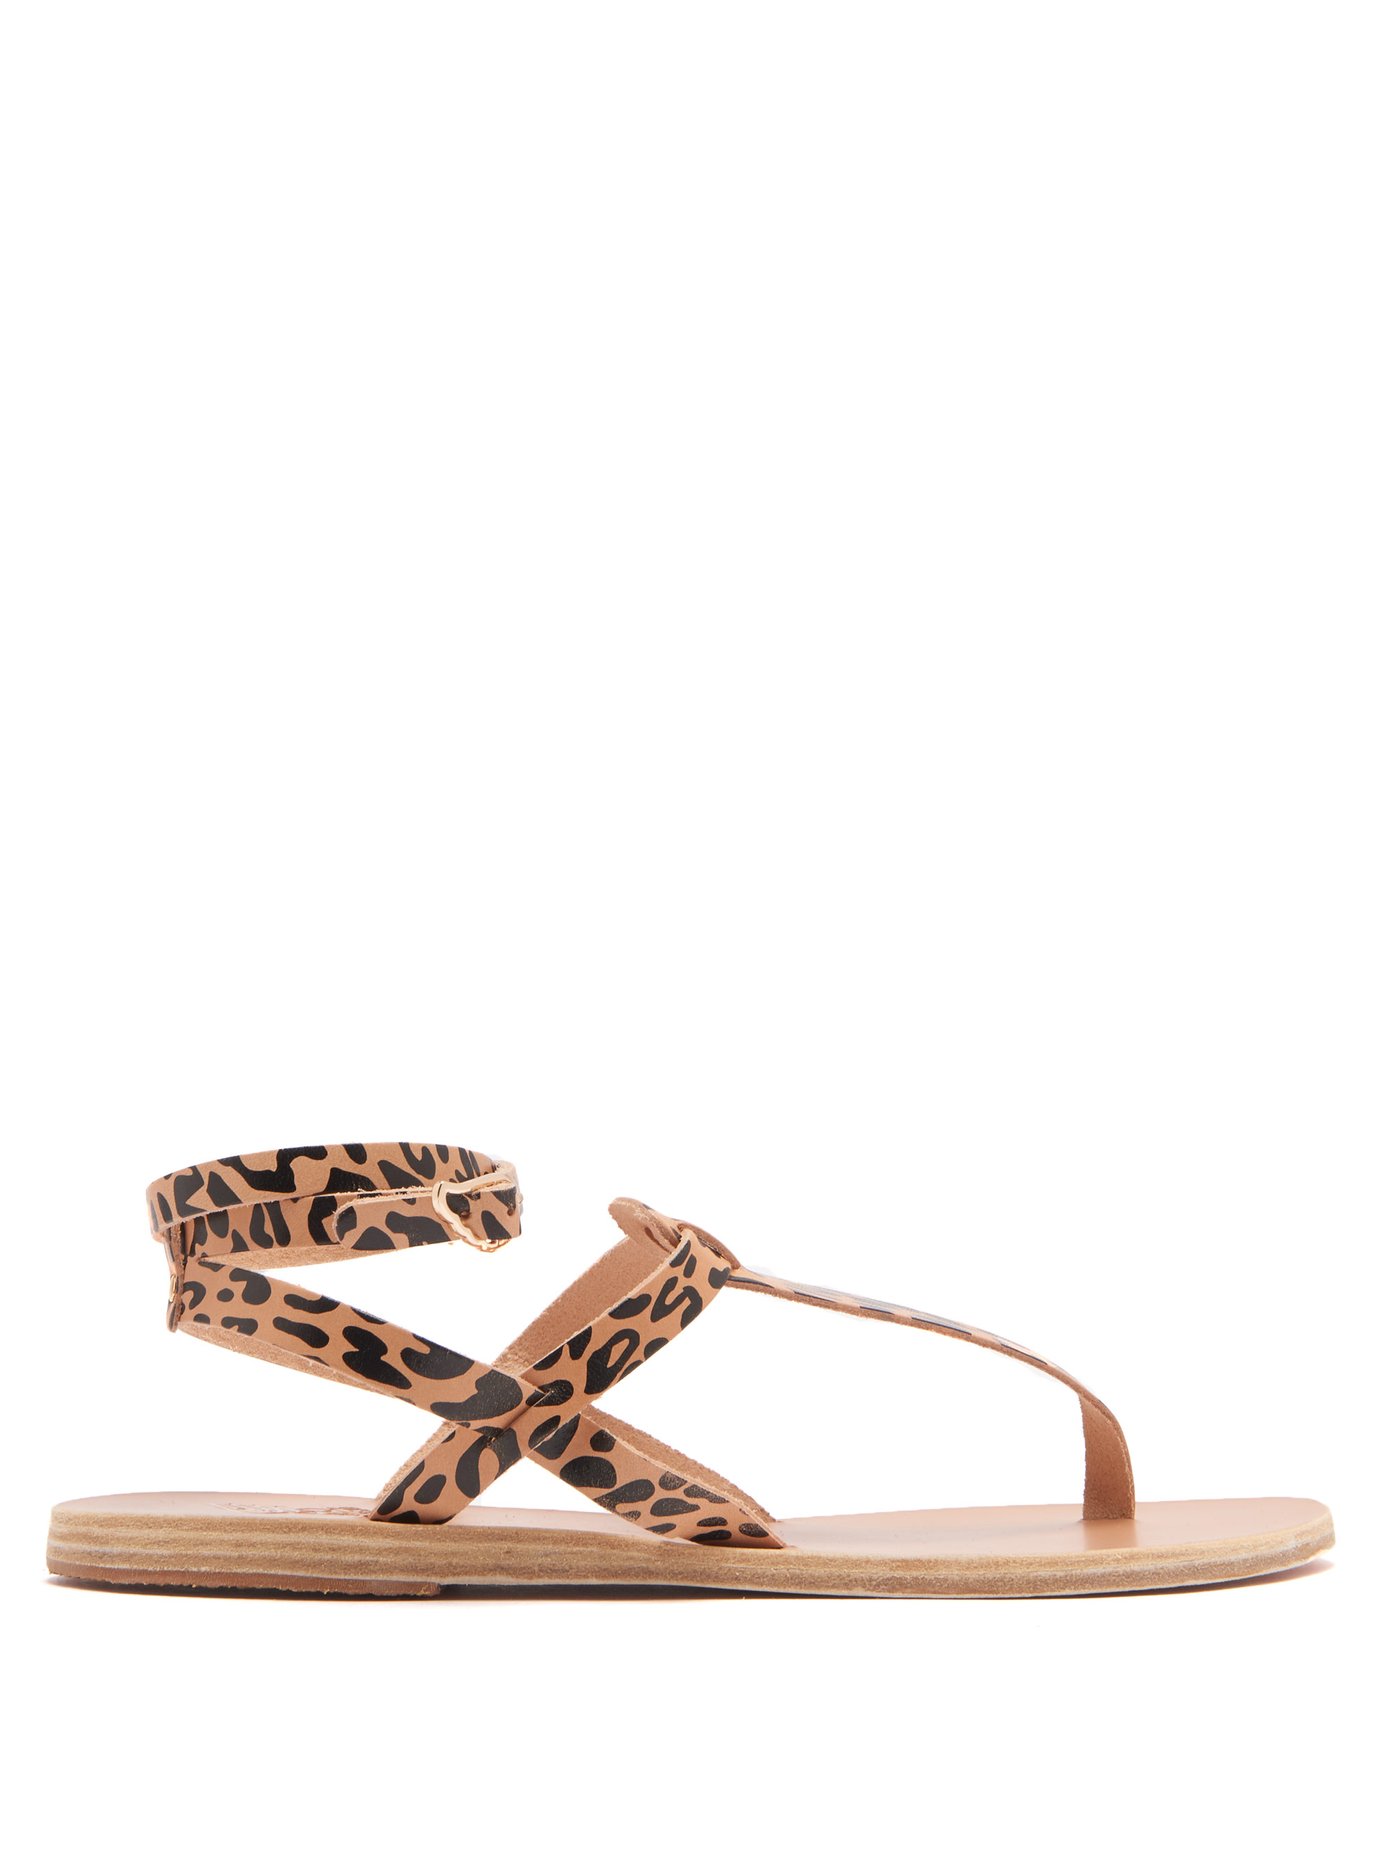 ancient greek sandals leopard